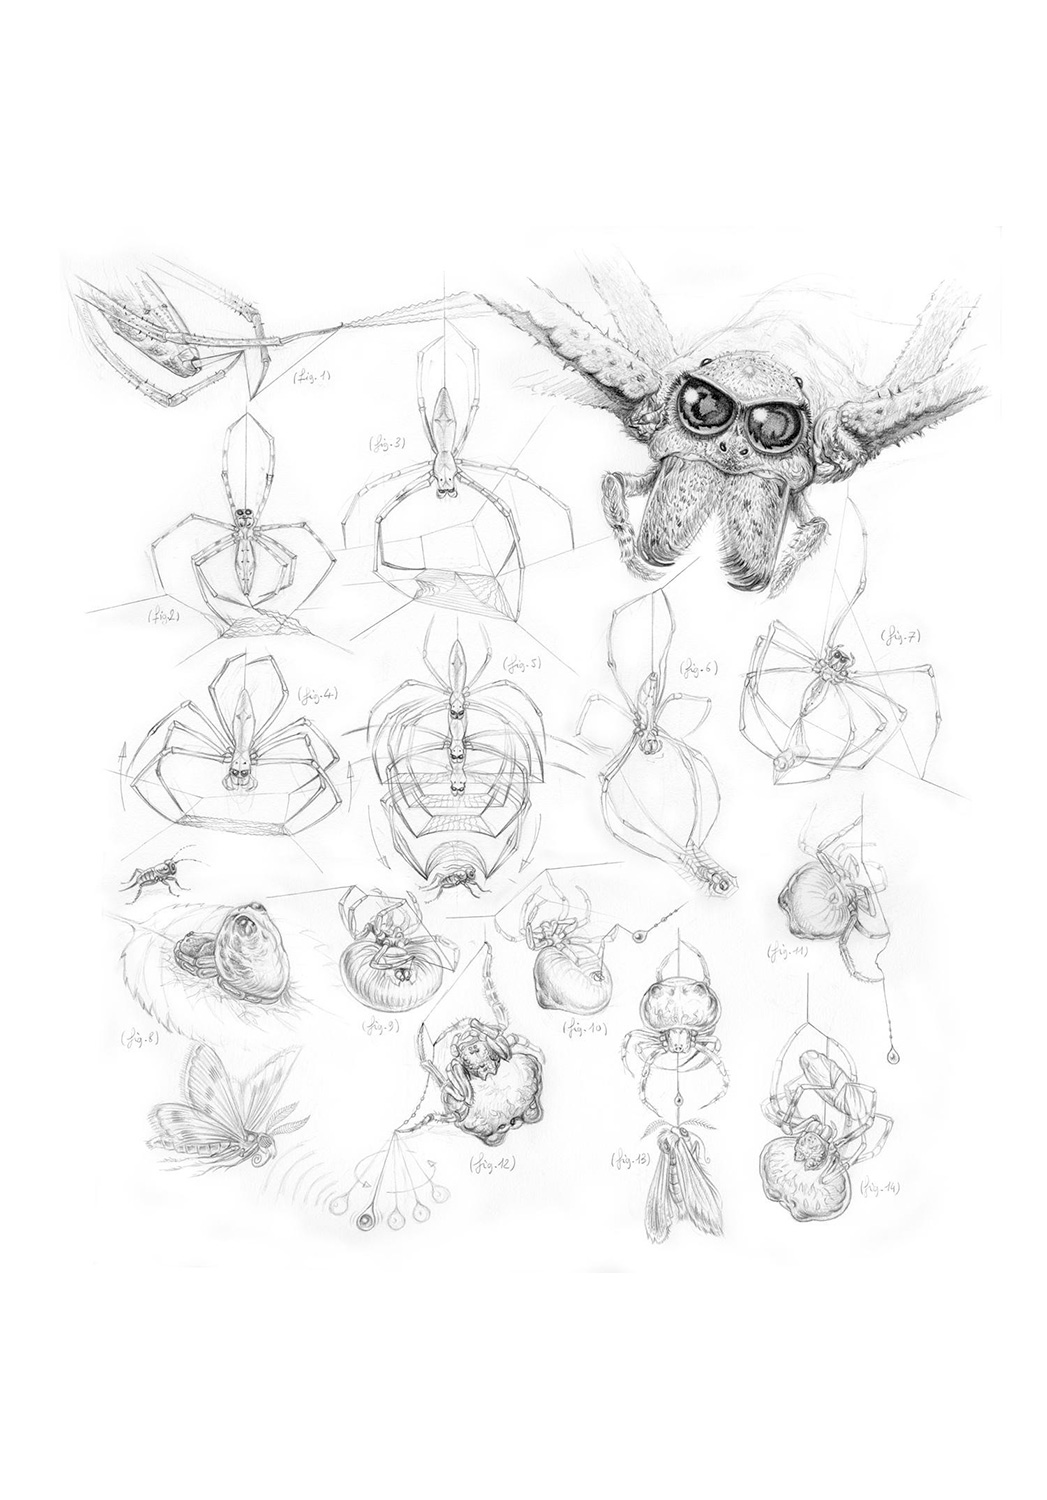 Marcello-art: Entomology 92 - Gladiator and bolas spider